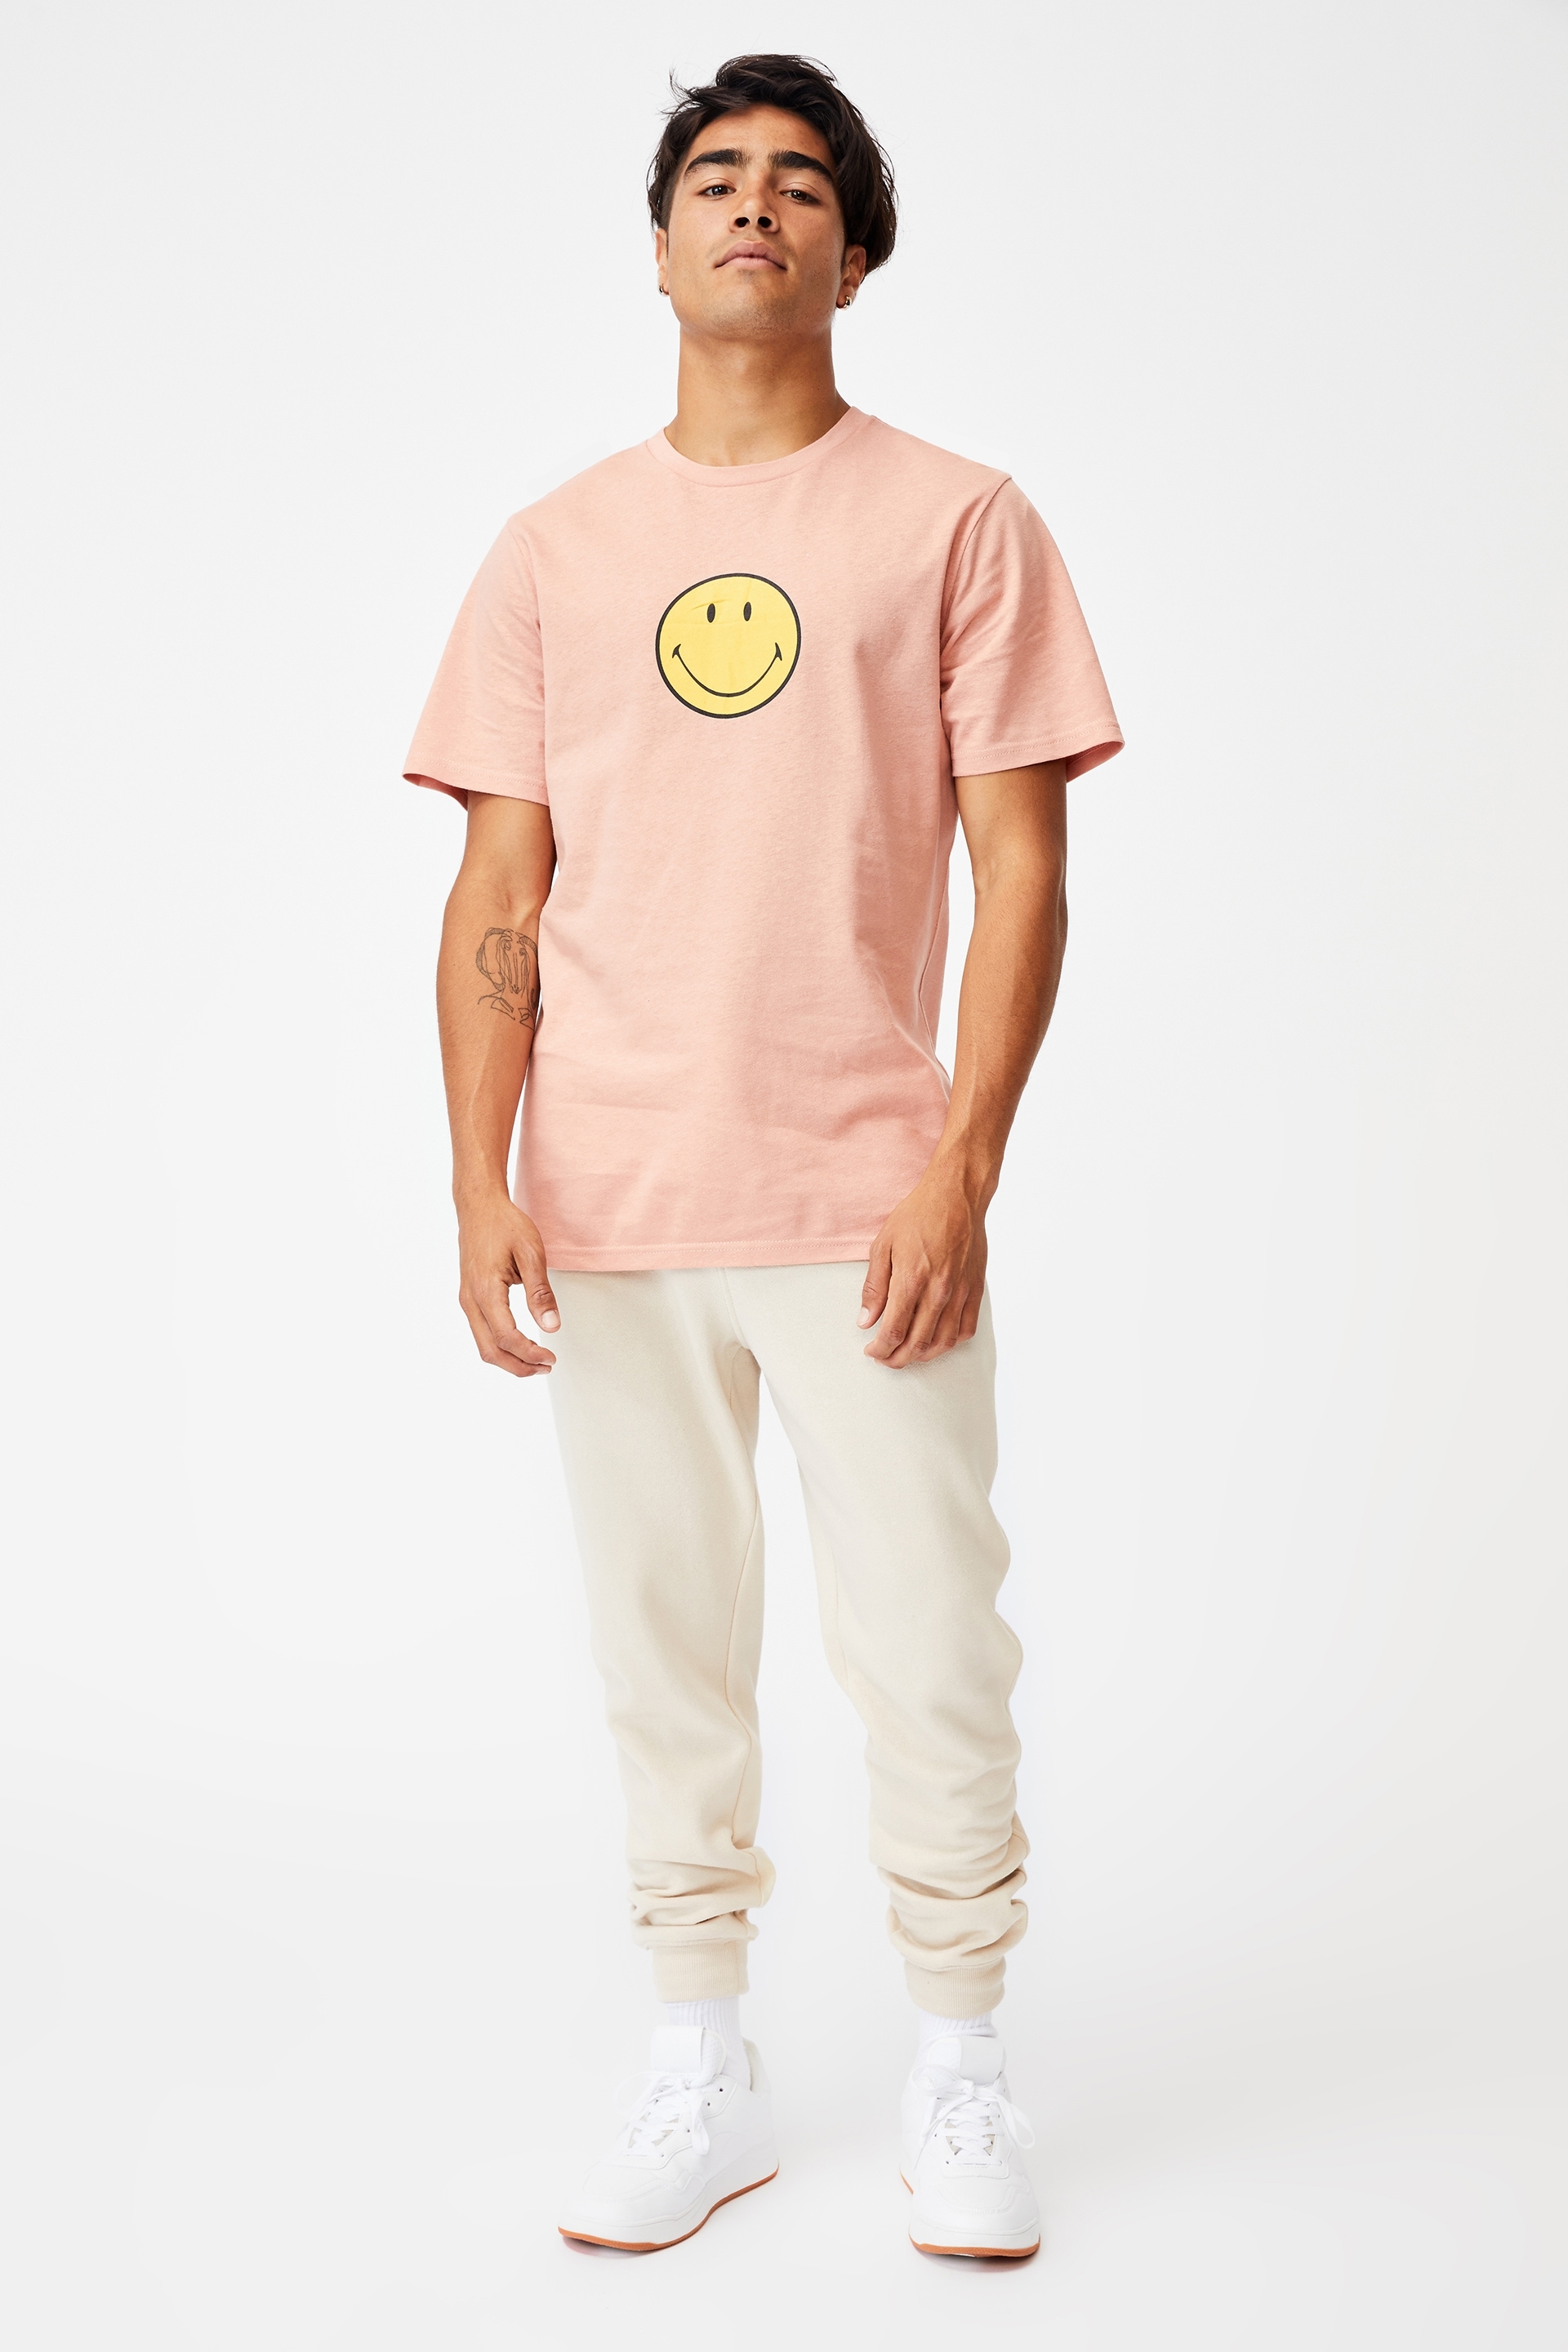 Cotton On Men - Tbar Collab Pop Culture T-Shirt - Lcn smi peach/smiley